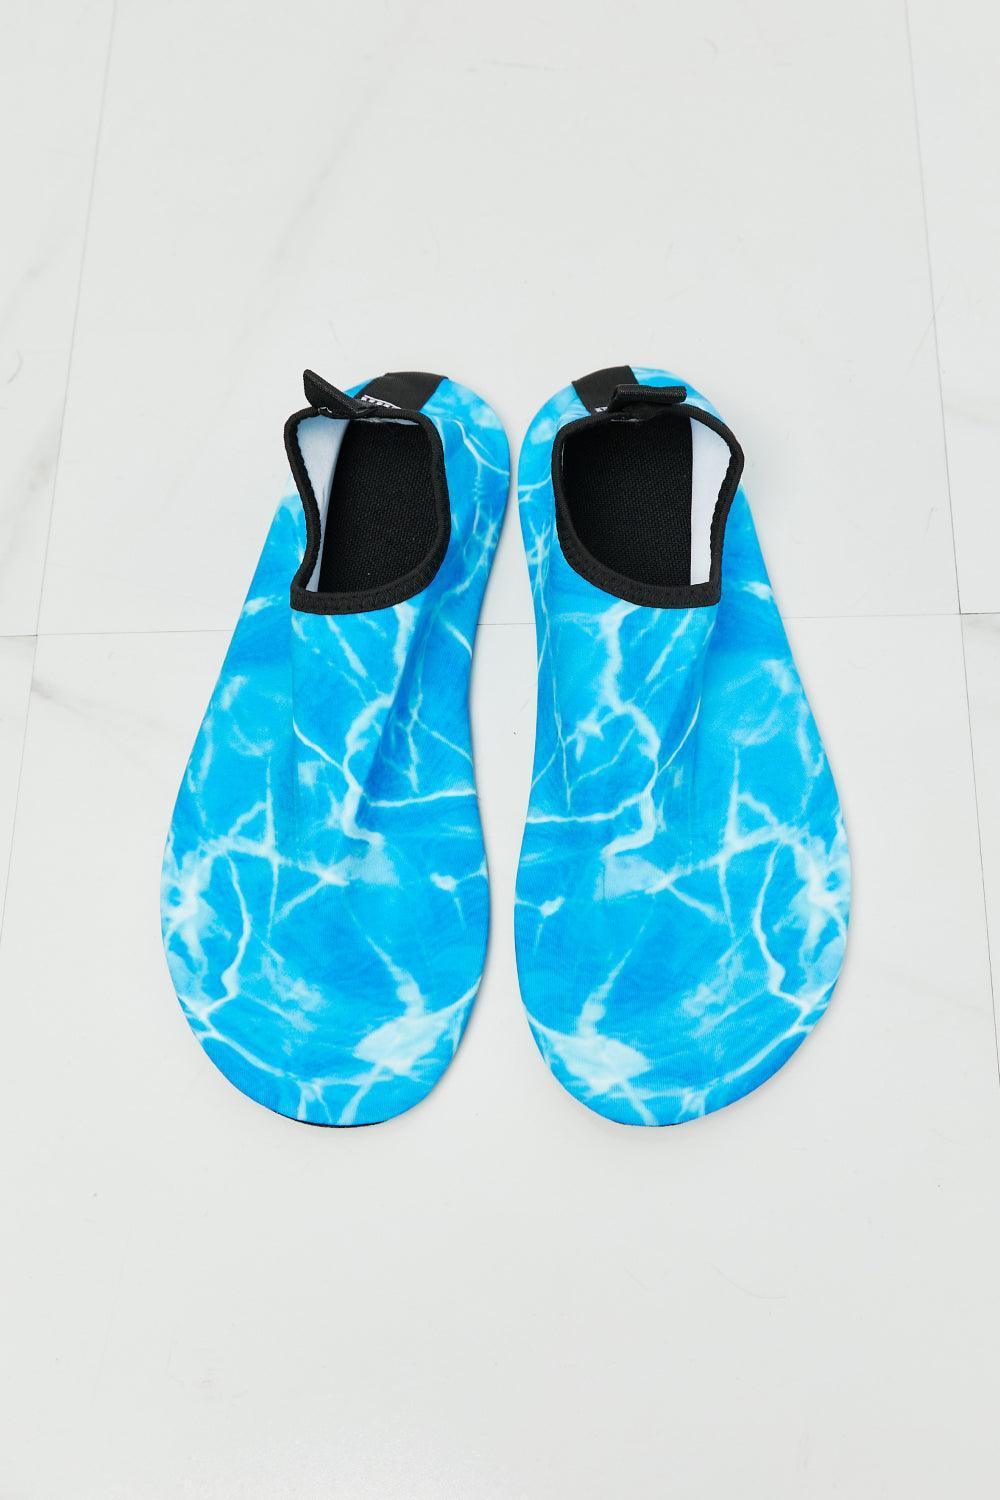 MMshoes Seashore Serenity Sky Blue Water Shoes - MXSTUDIO.COM